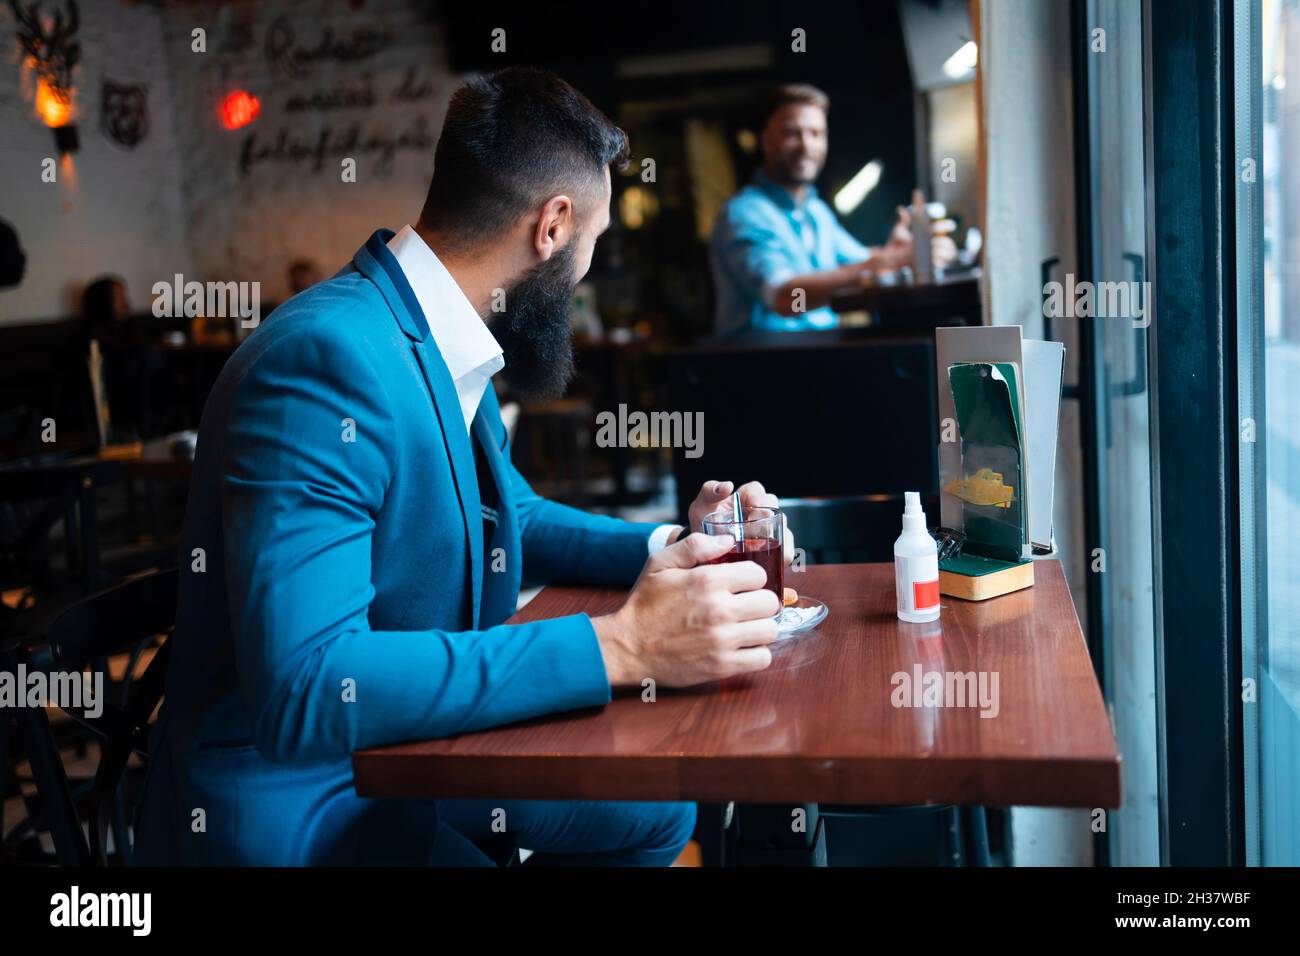 Deux amis de sexe masculin discutant dans un bar Banque D'Images